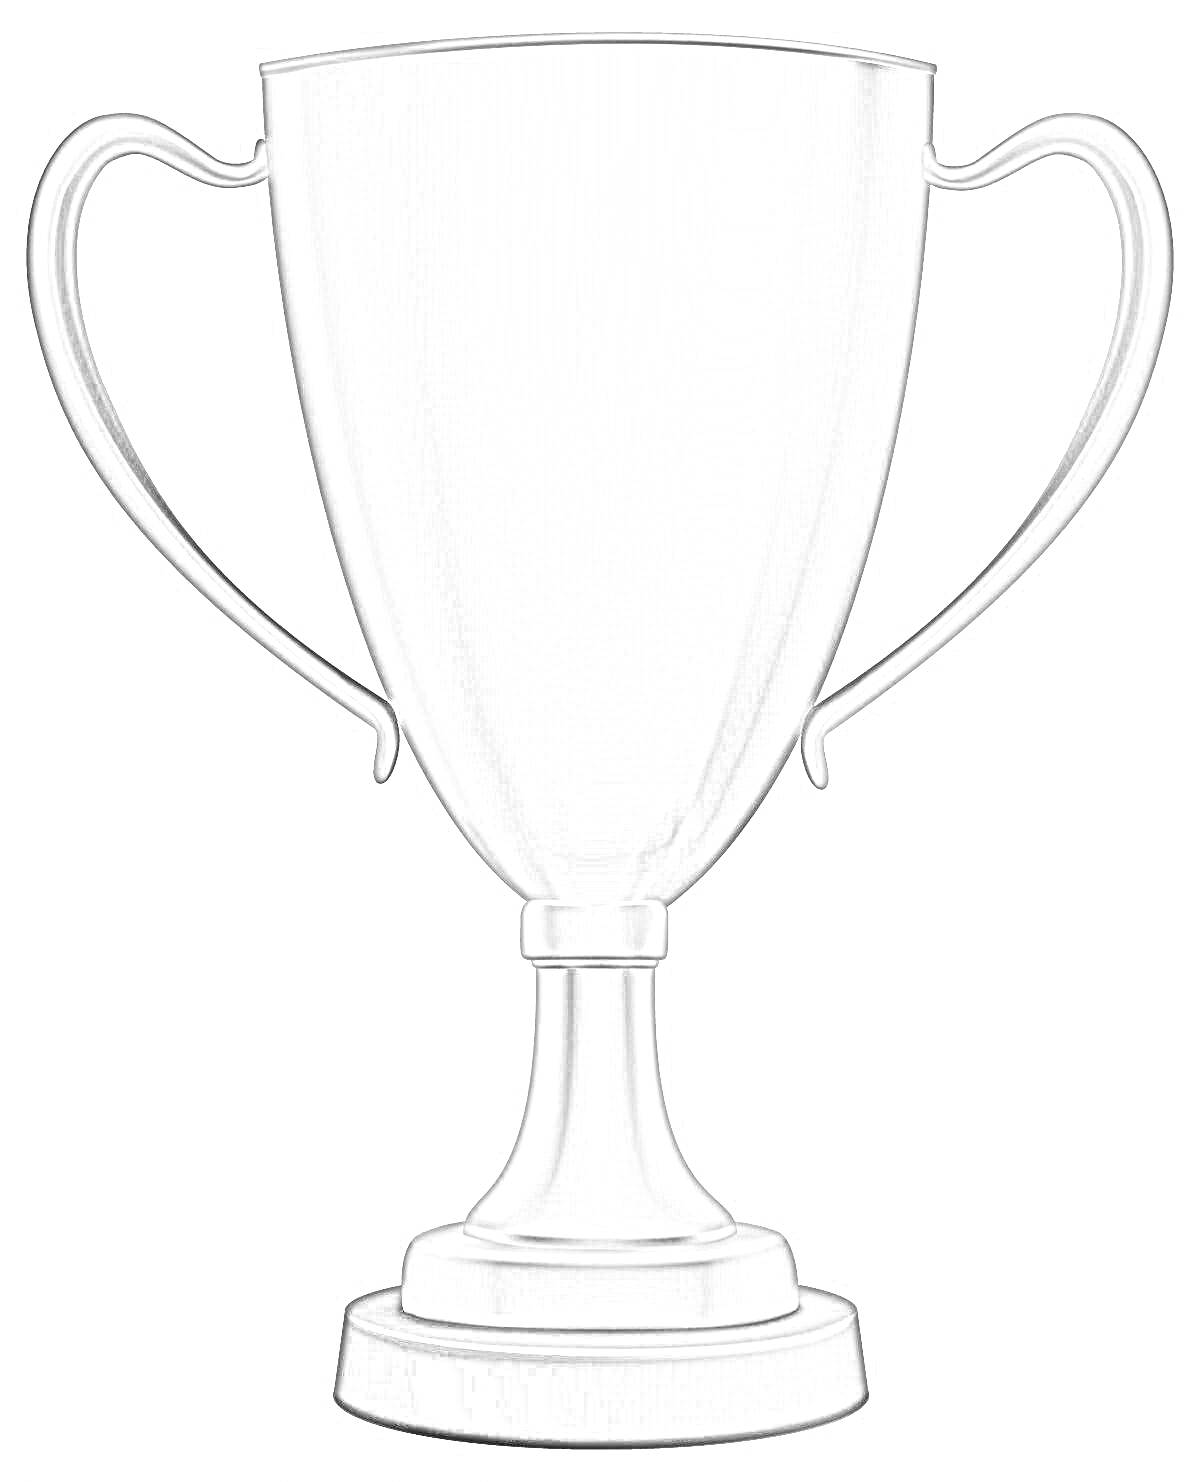 На раскраске изображено: Кубок, Победа, Награда, Трофей, Спорт